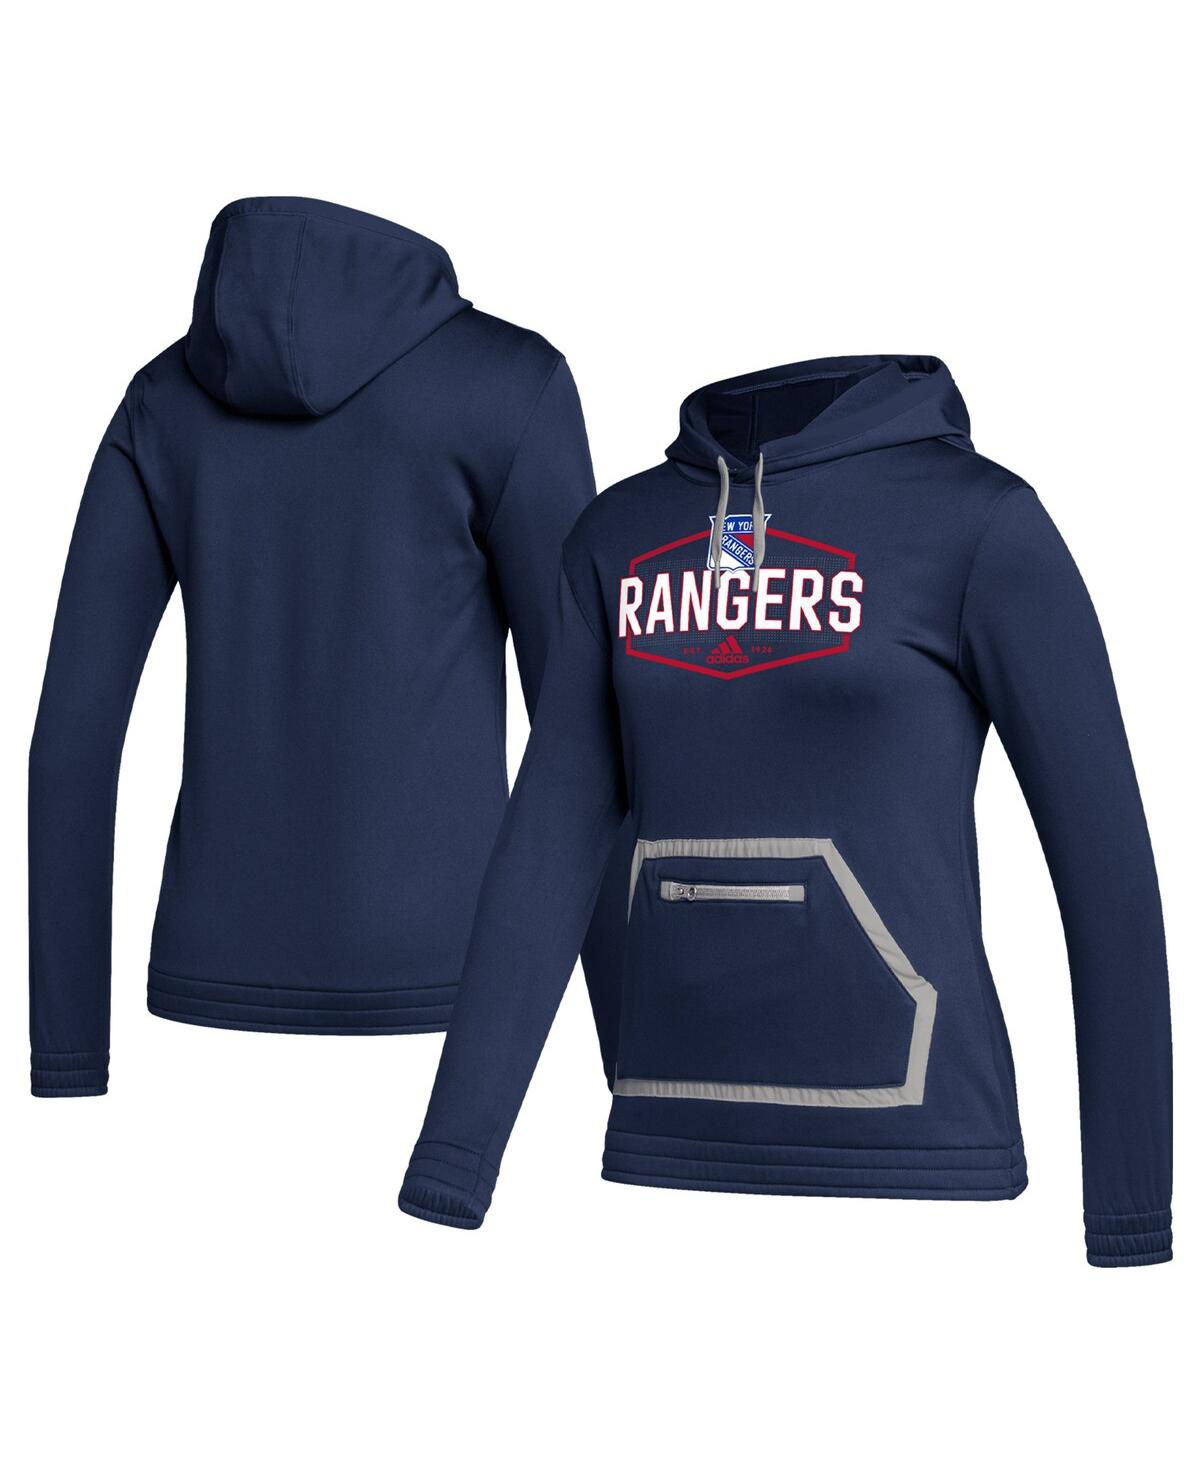 Shop Adidas Originals Women's Adidas Navy New York Rangers Team Issue Pullover Hoodie